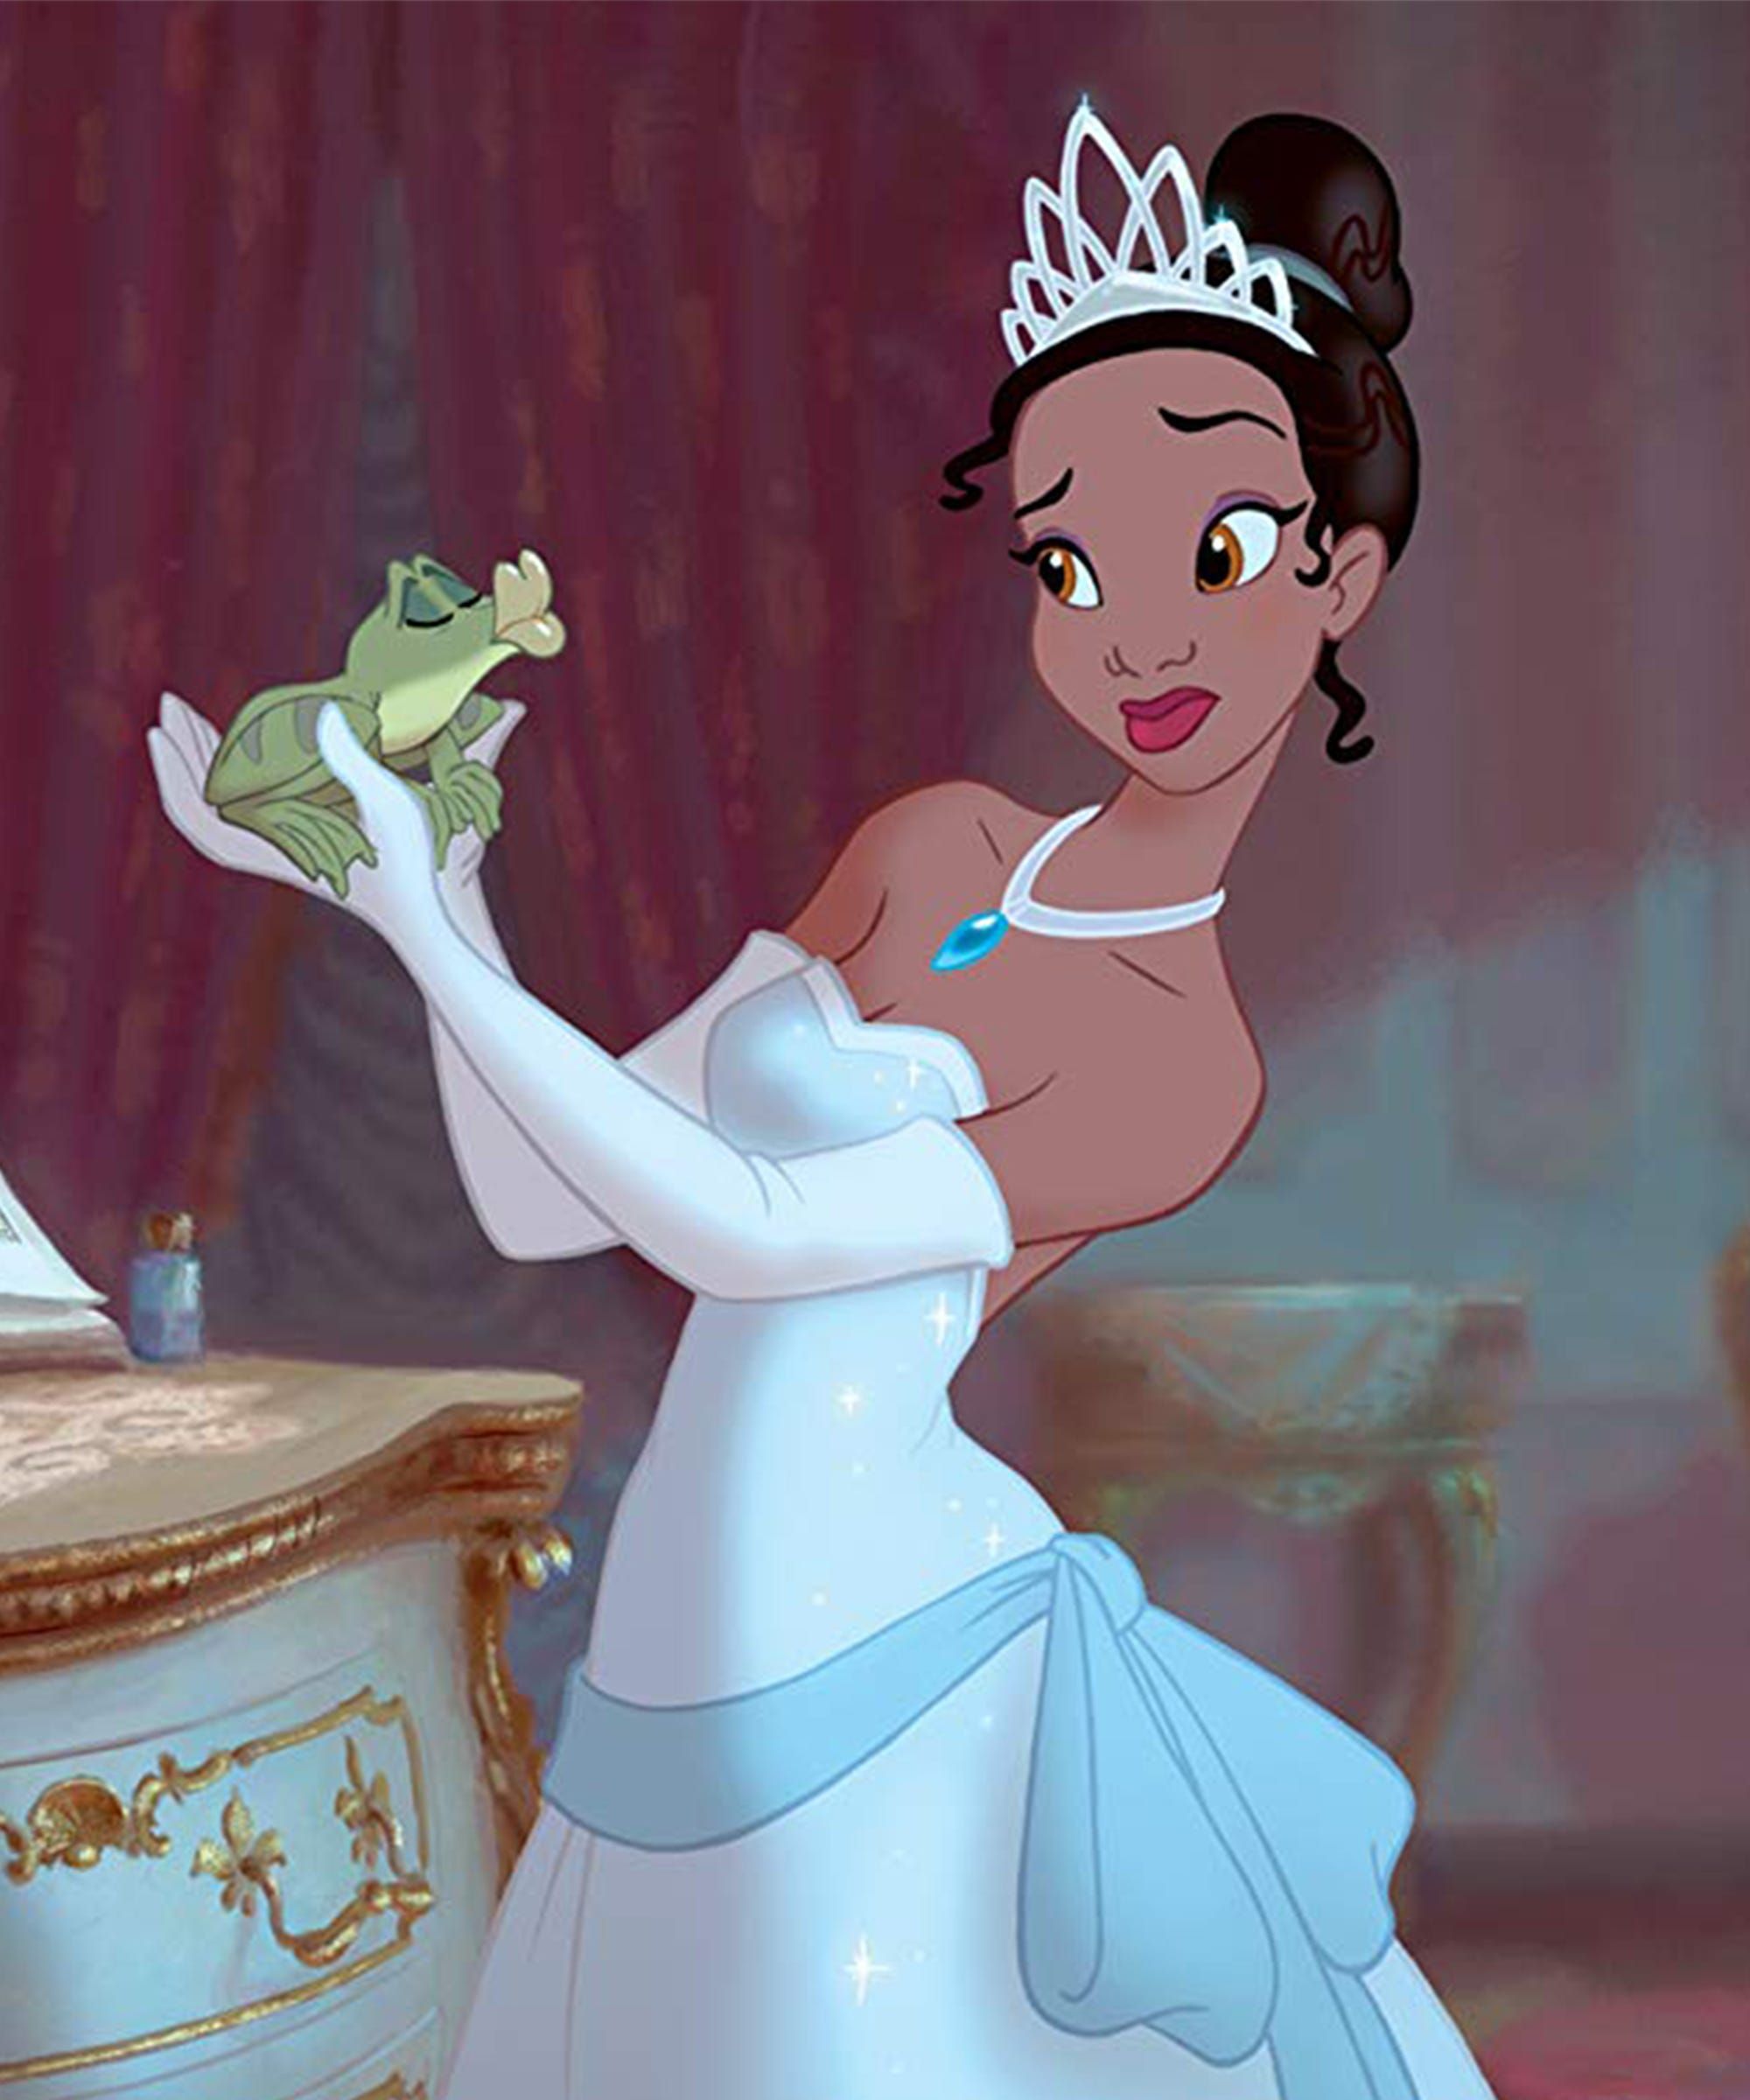 Disney To Change Princess Tiana's Skin Tone After Whitewashing Complaints For "W